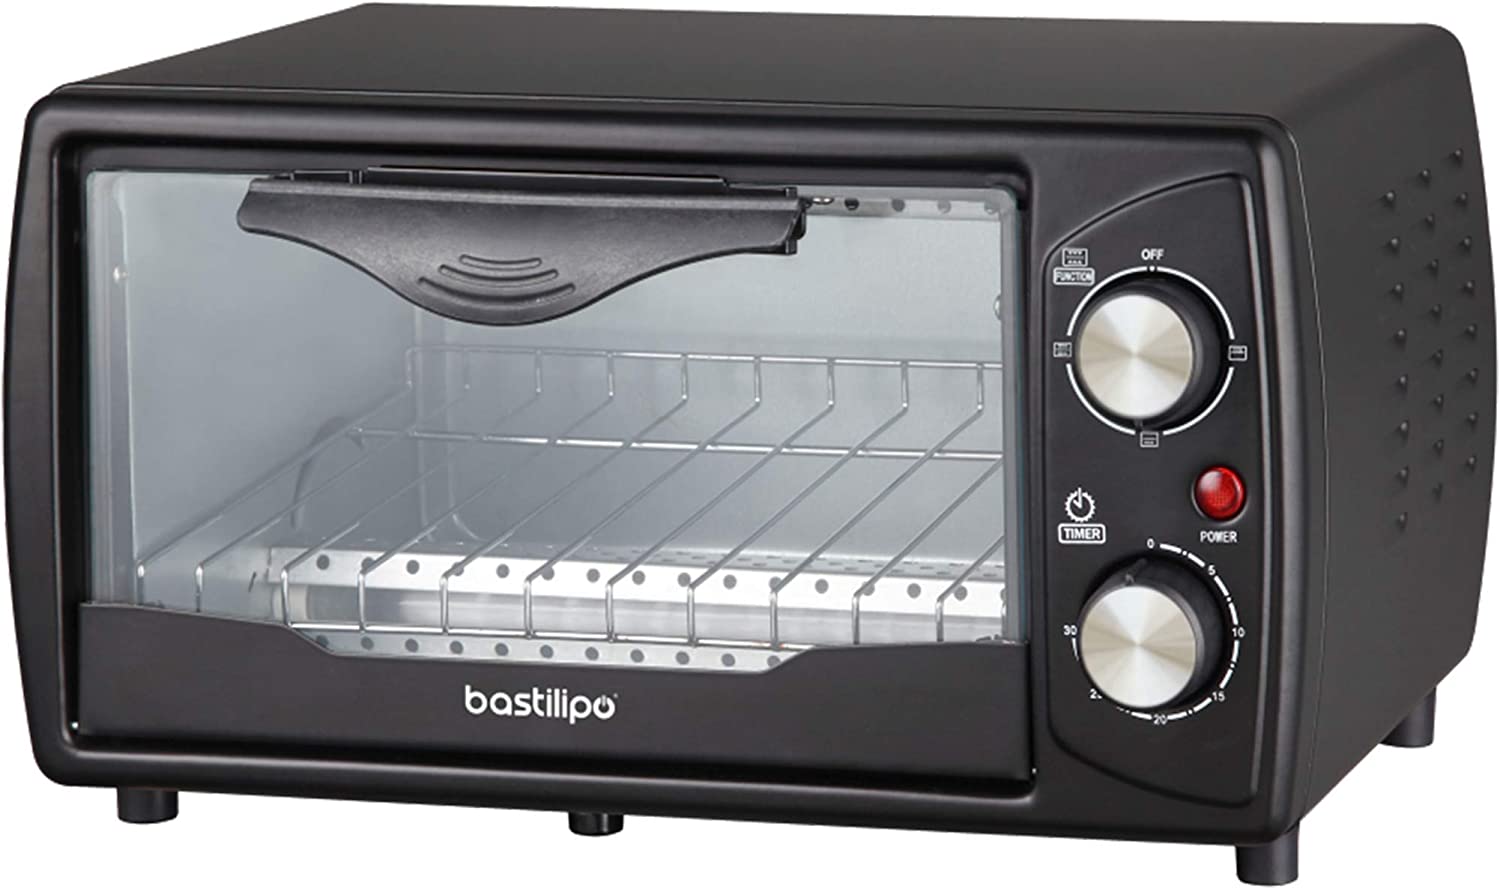 Bastilipo Turin Toaster and Mini Oven 9 Litres Black